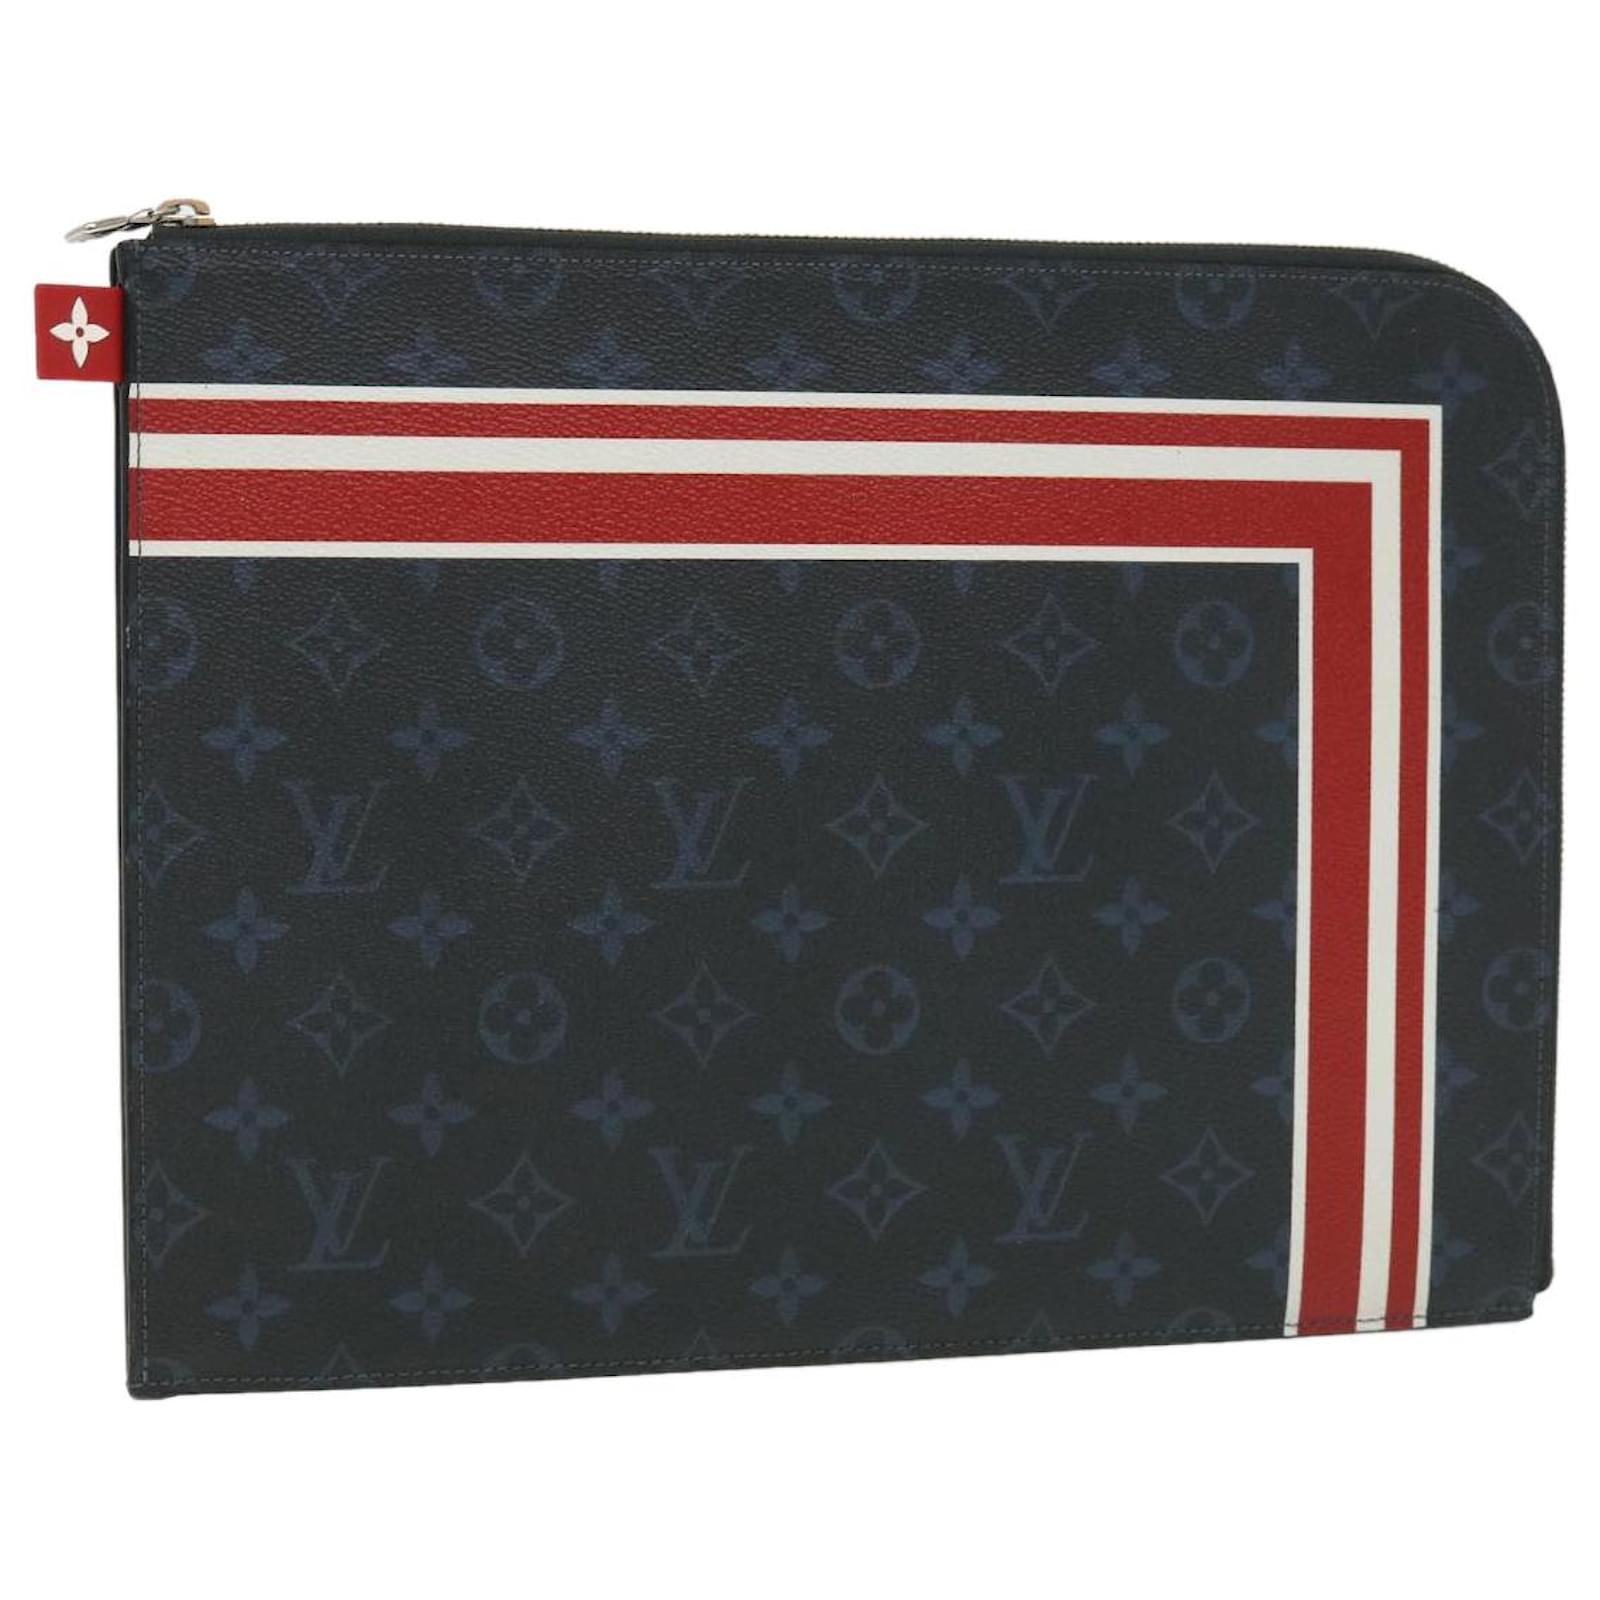 Louis Vuitton, Bags, Red Lv Clutch